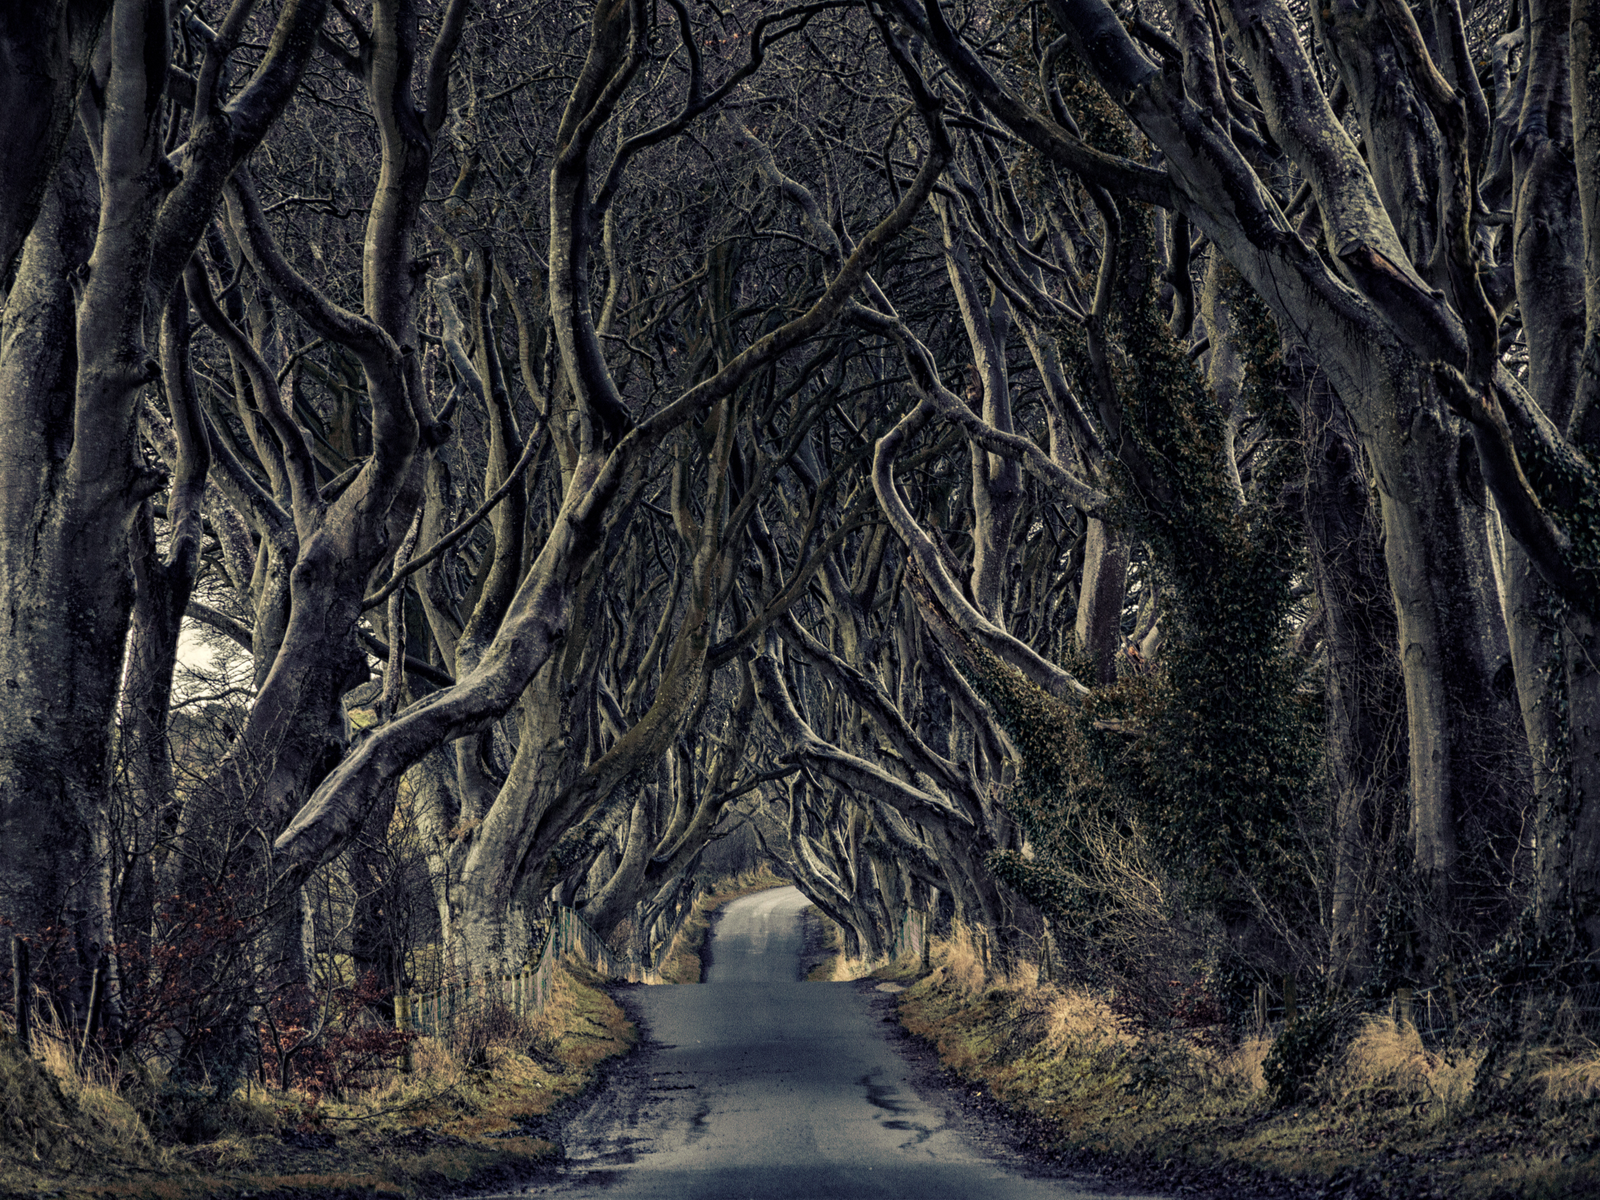 Dark Hedges in Antrim in Ireland, a Game of Thrones filming location